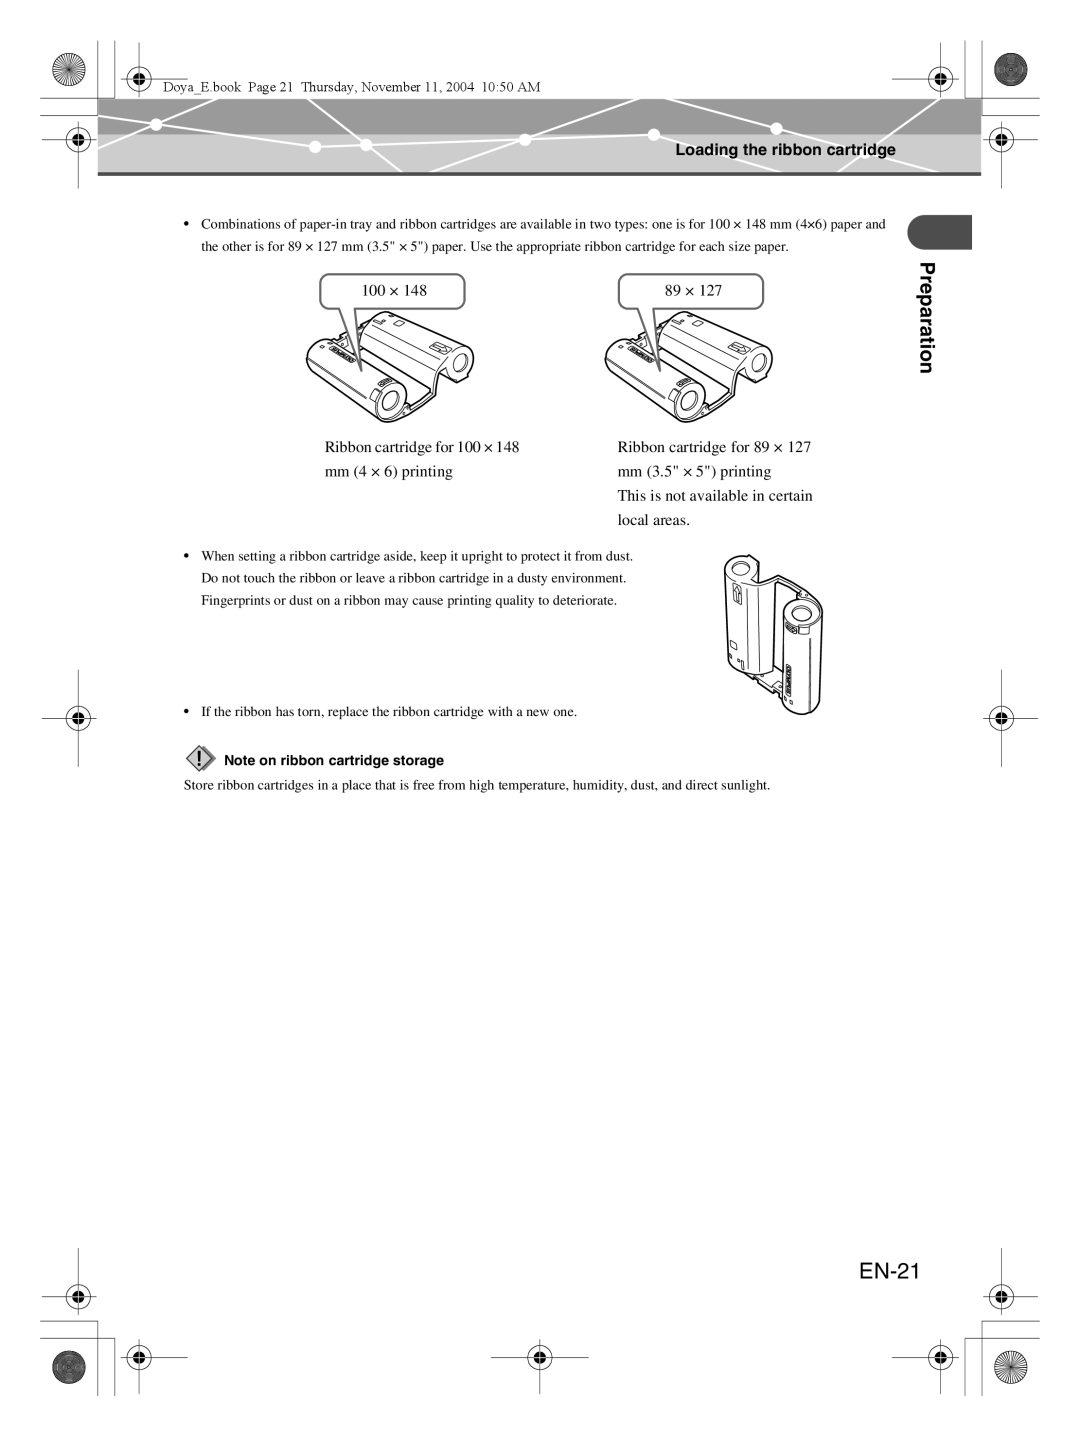 Olympus P-S100 user manual EN-21, Preparation, Loading the ribbon cartridge, 100 ×, Note on ribbon cartridge storage 